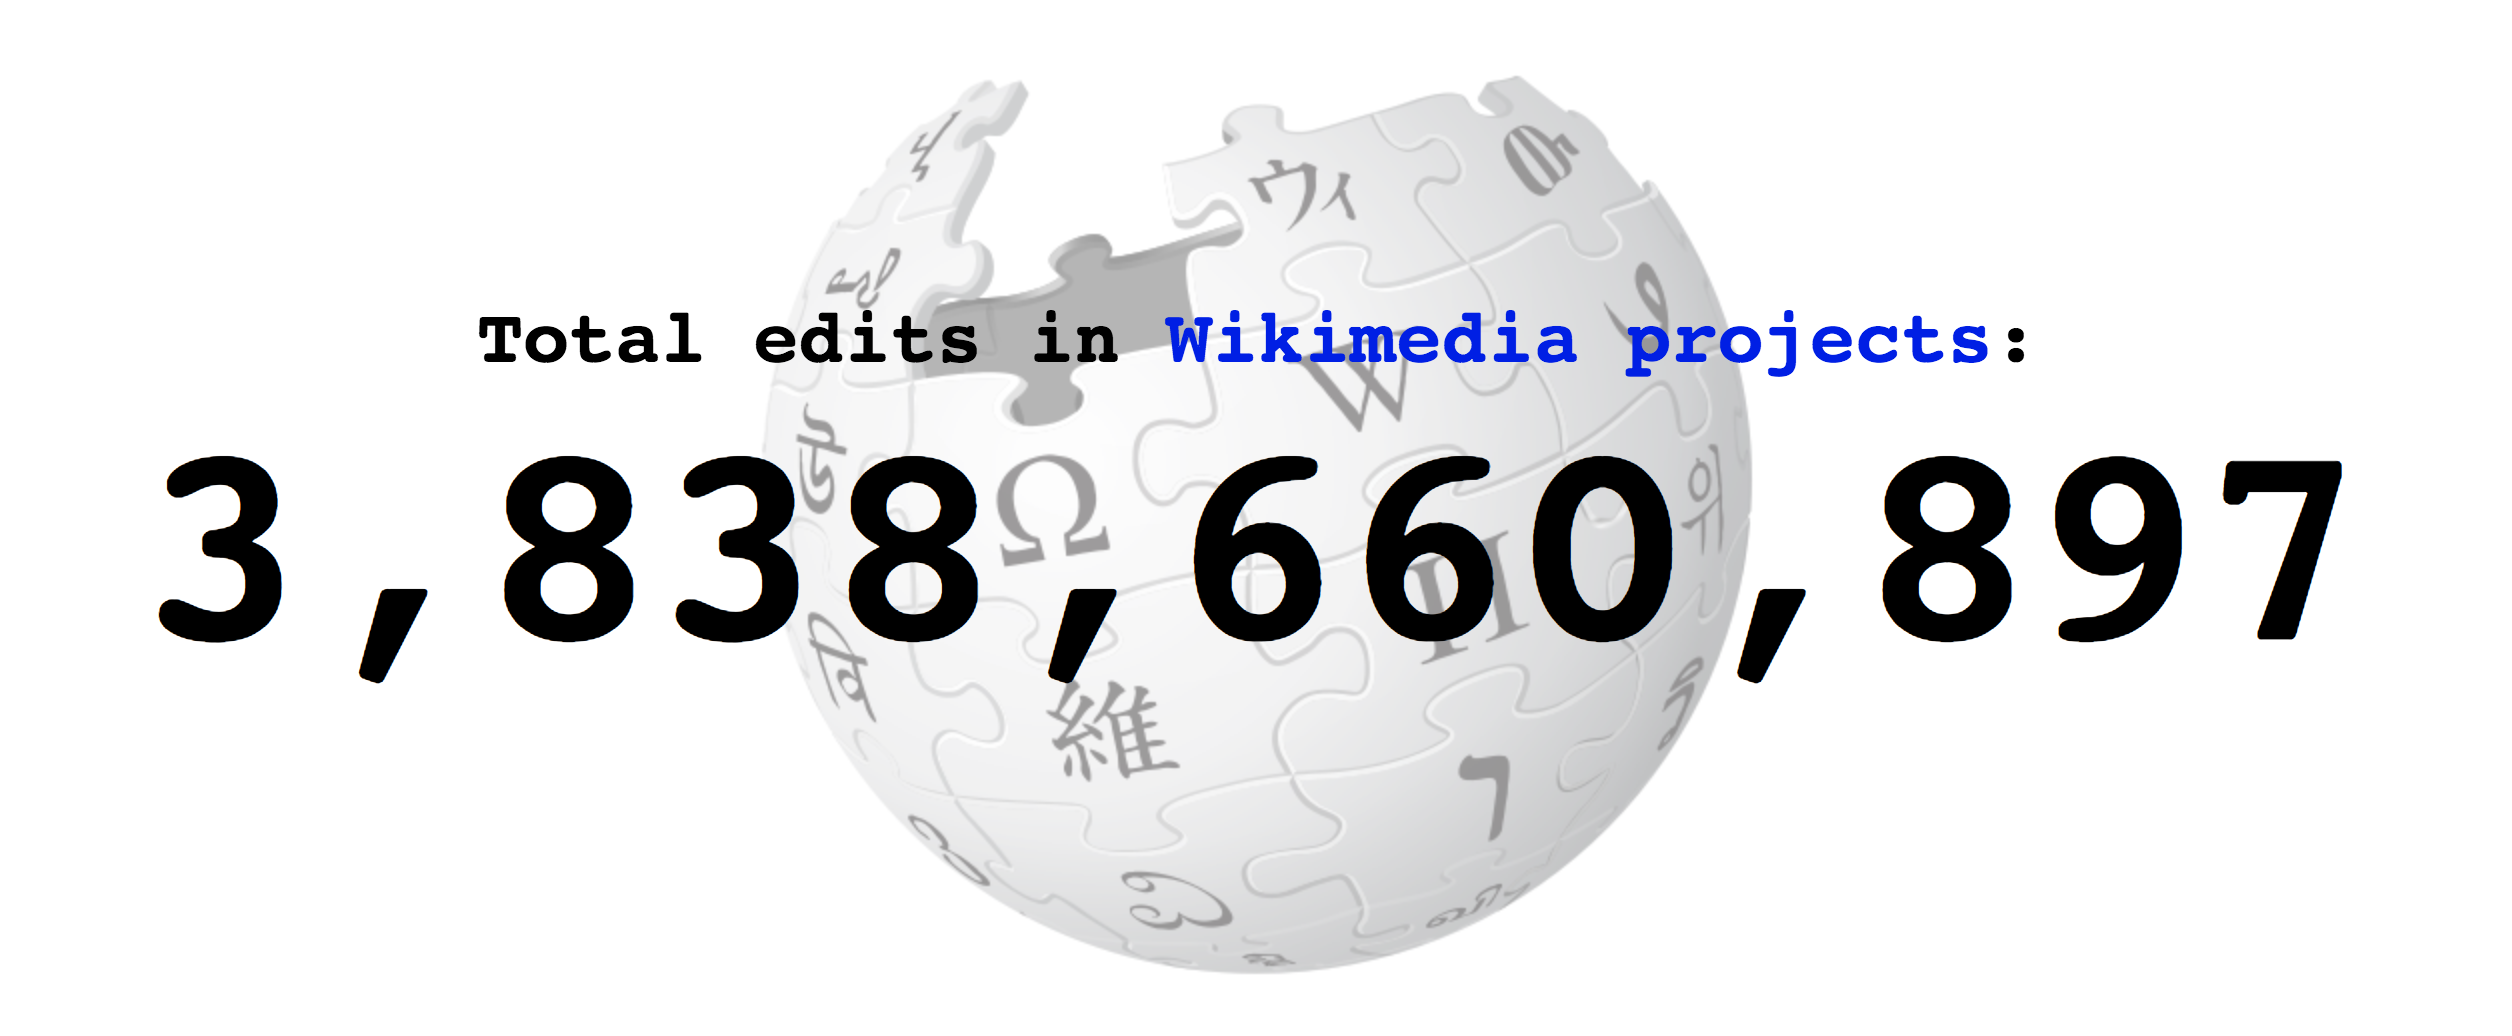 wikimedia-edits